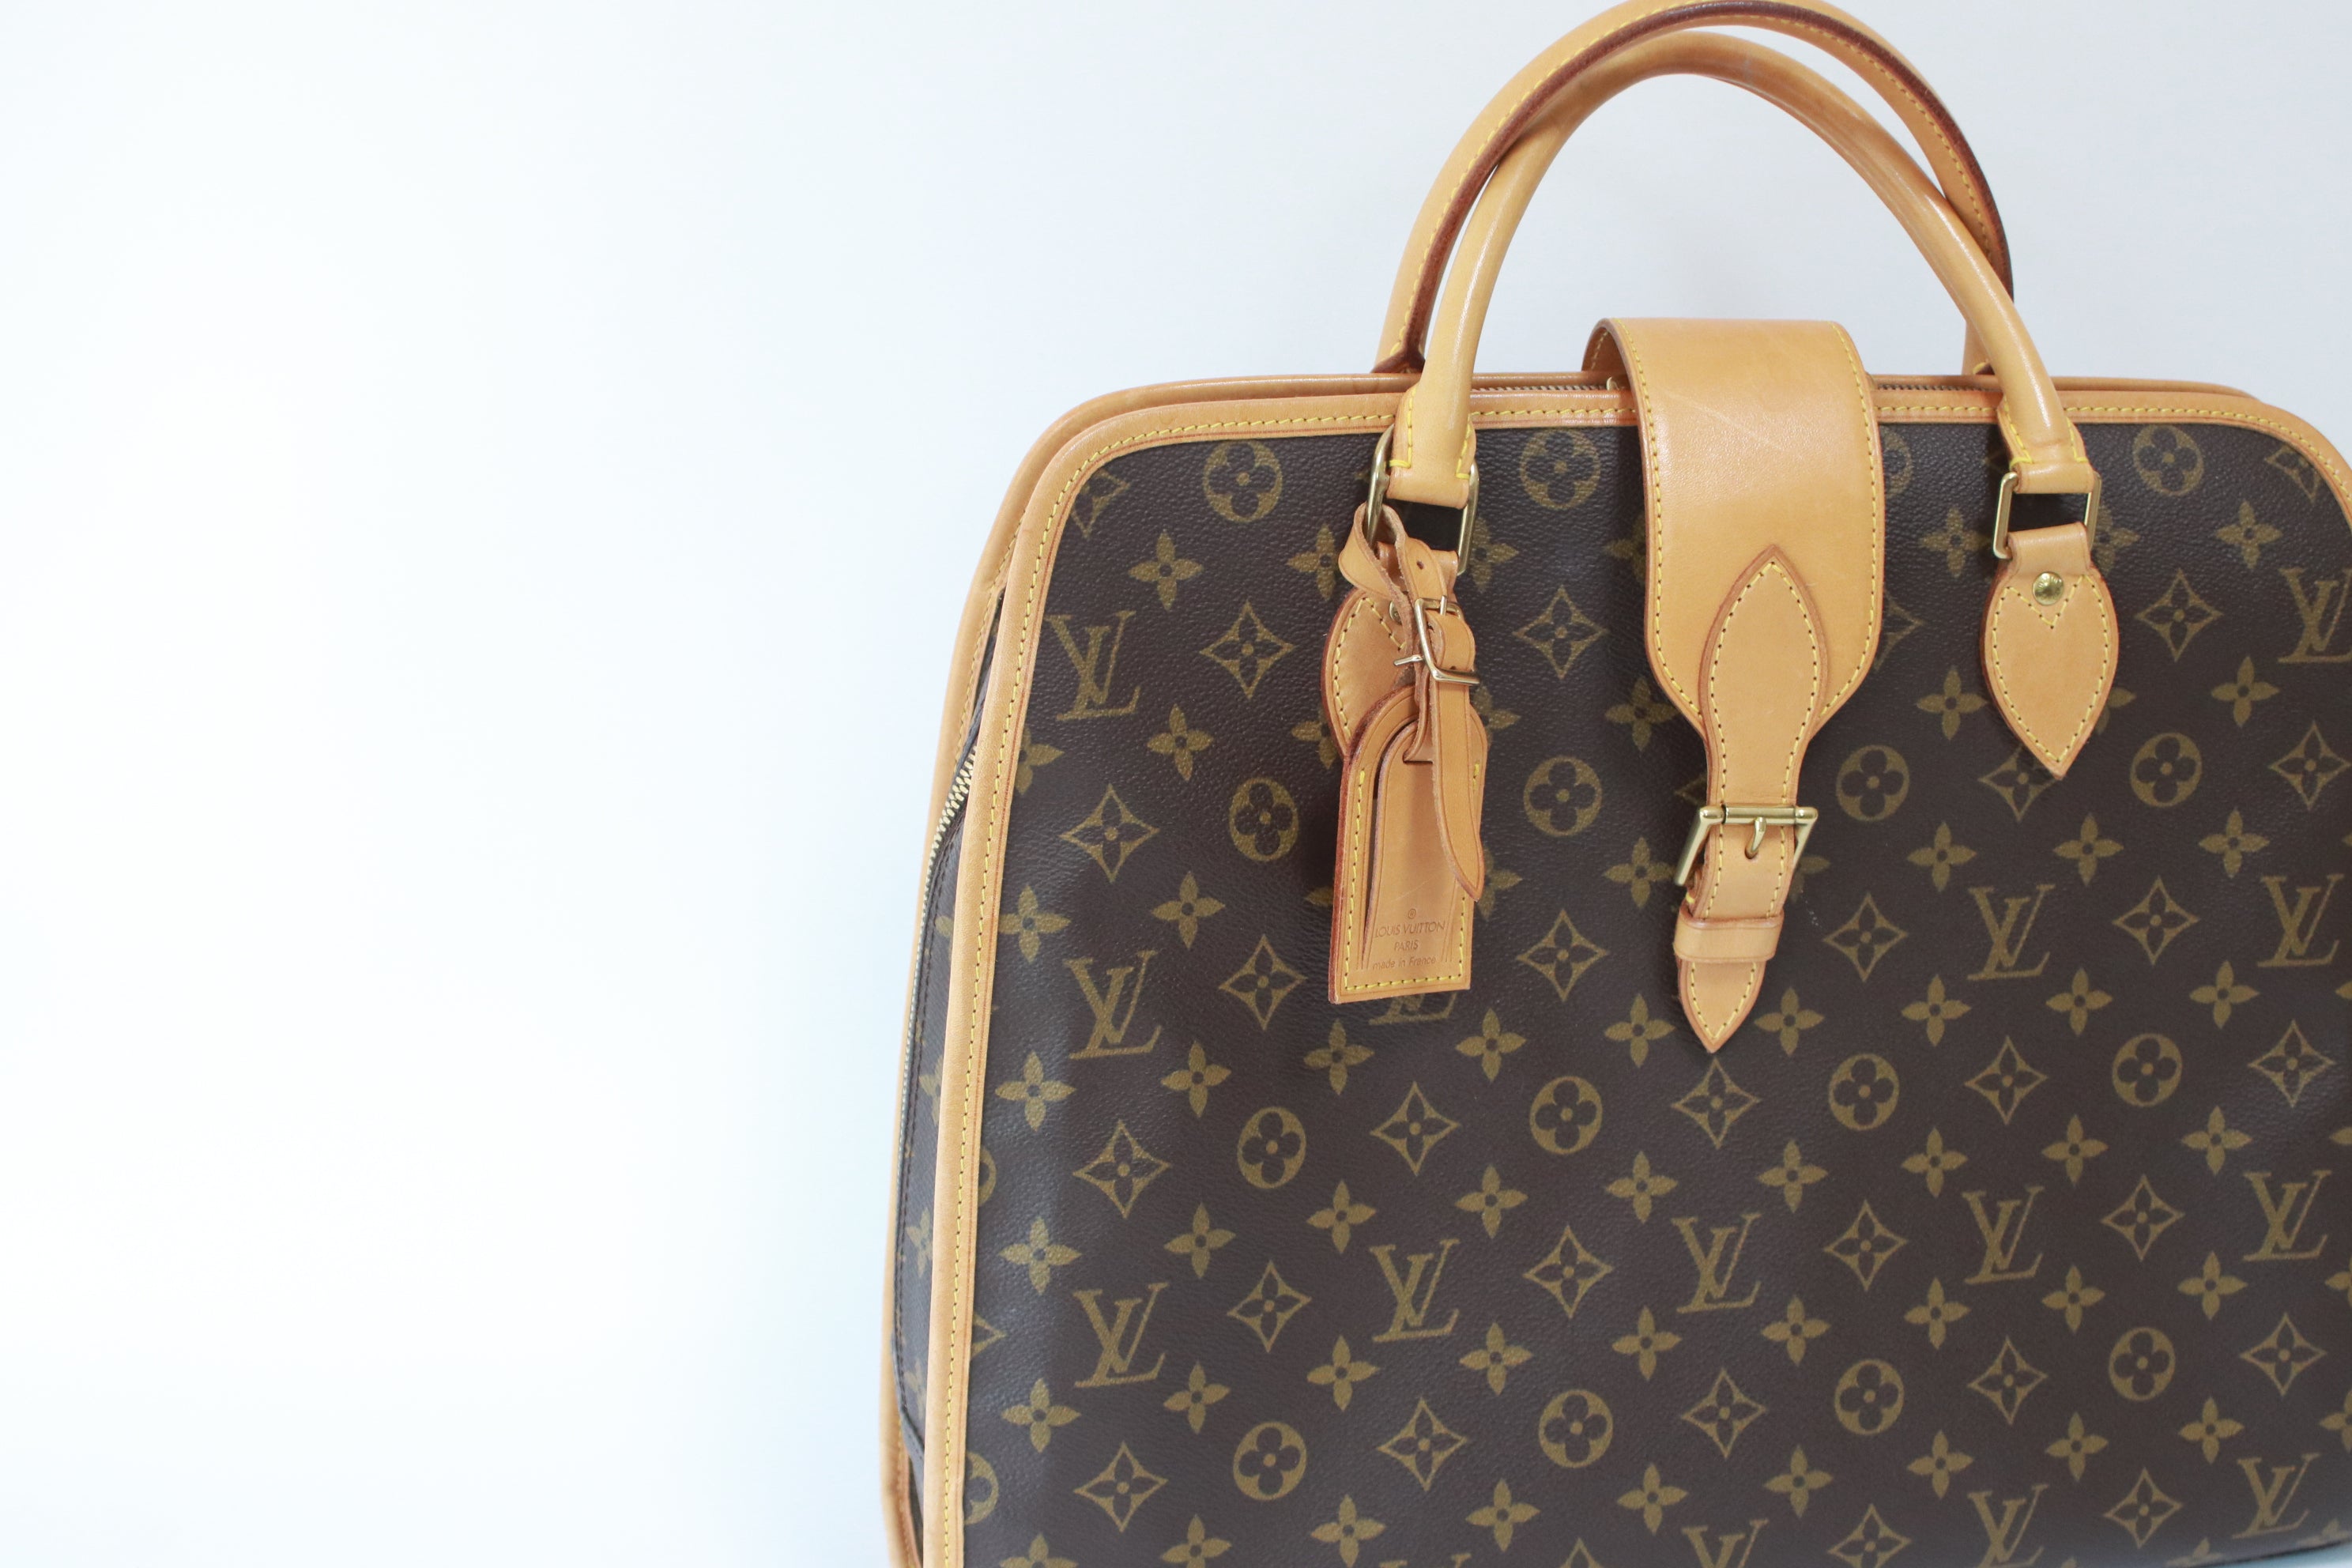 Louis Vuitton Keepall 50 Duffle Bag Used (7076)